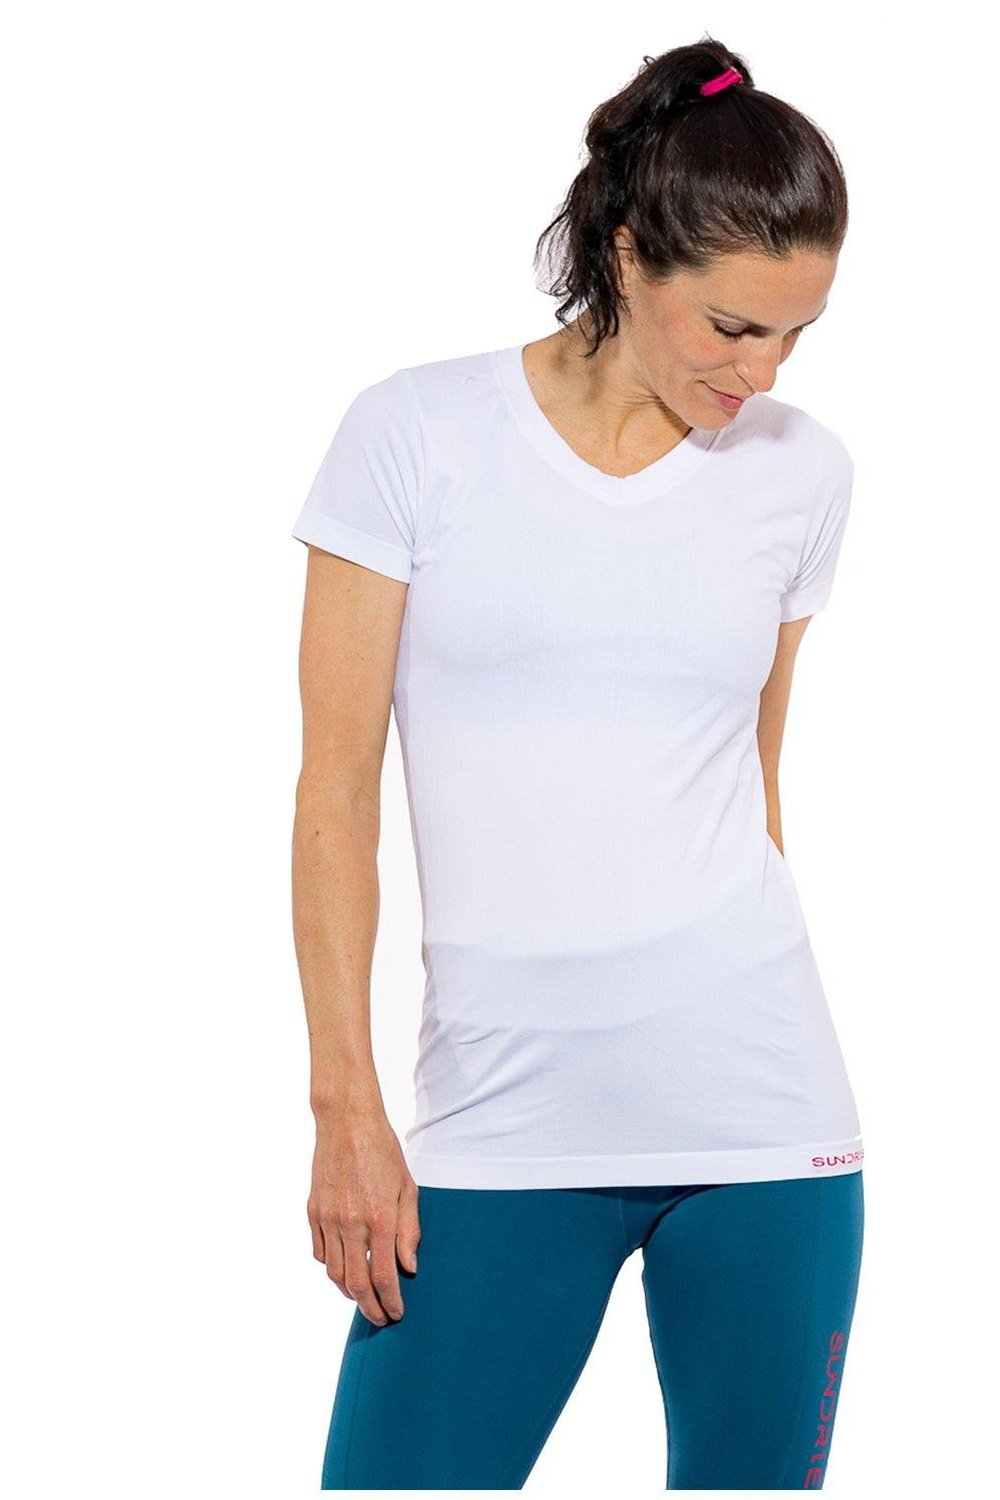 Sundried Eco Tech Women's Fitness Top T-Shirt Activewear